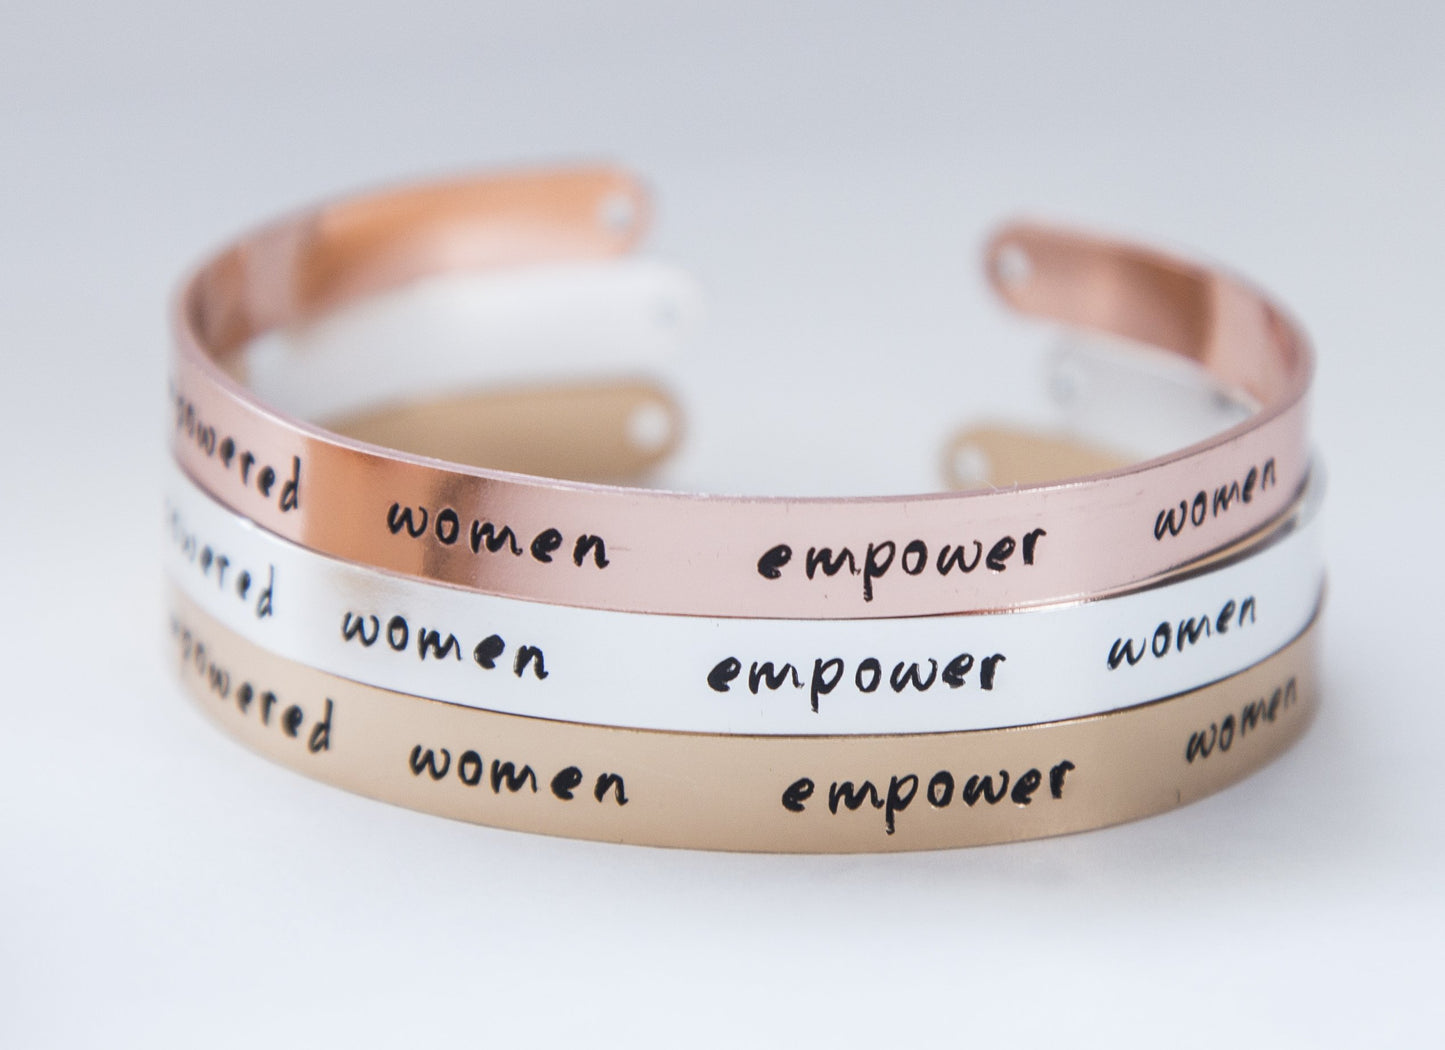 Empowered women - armband